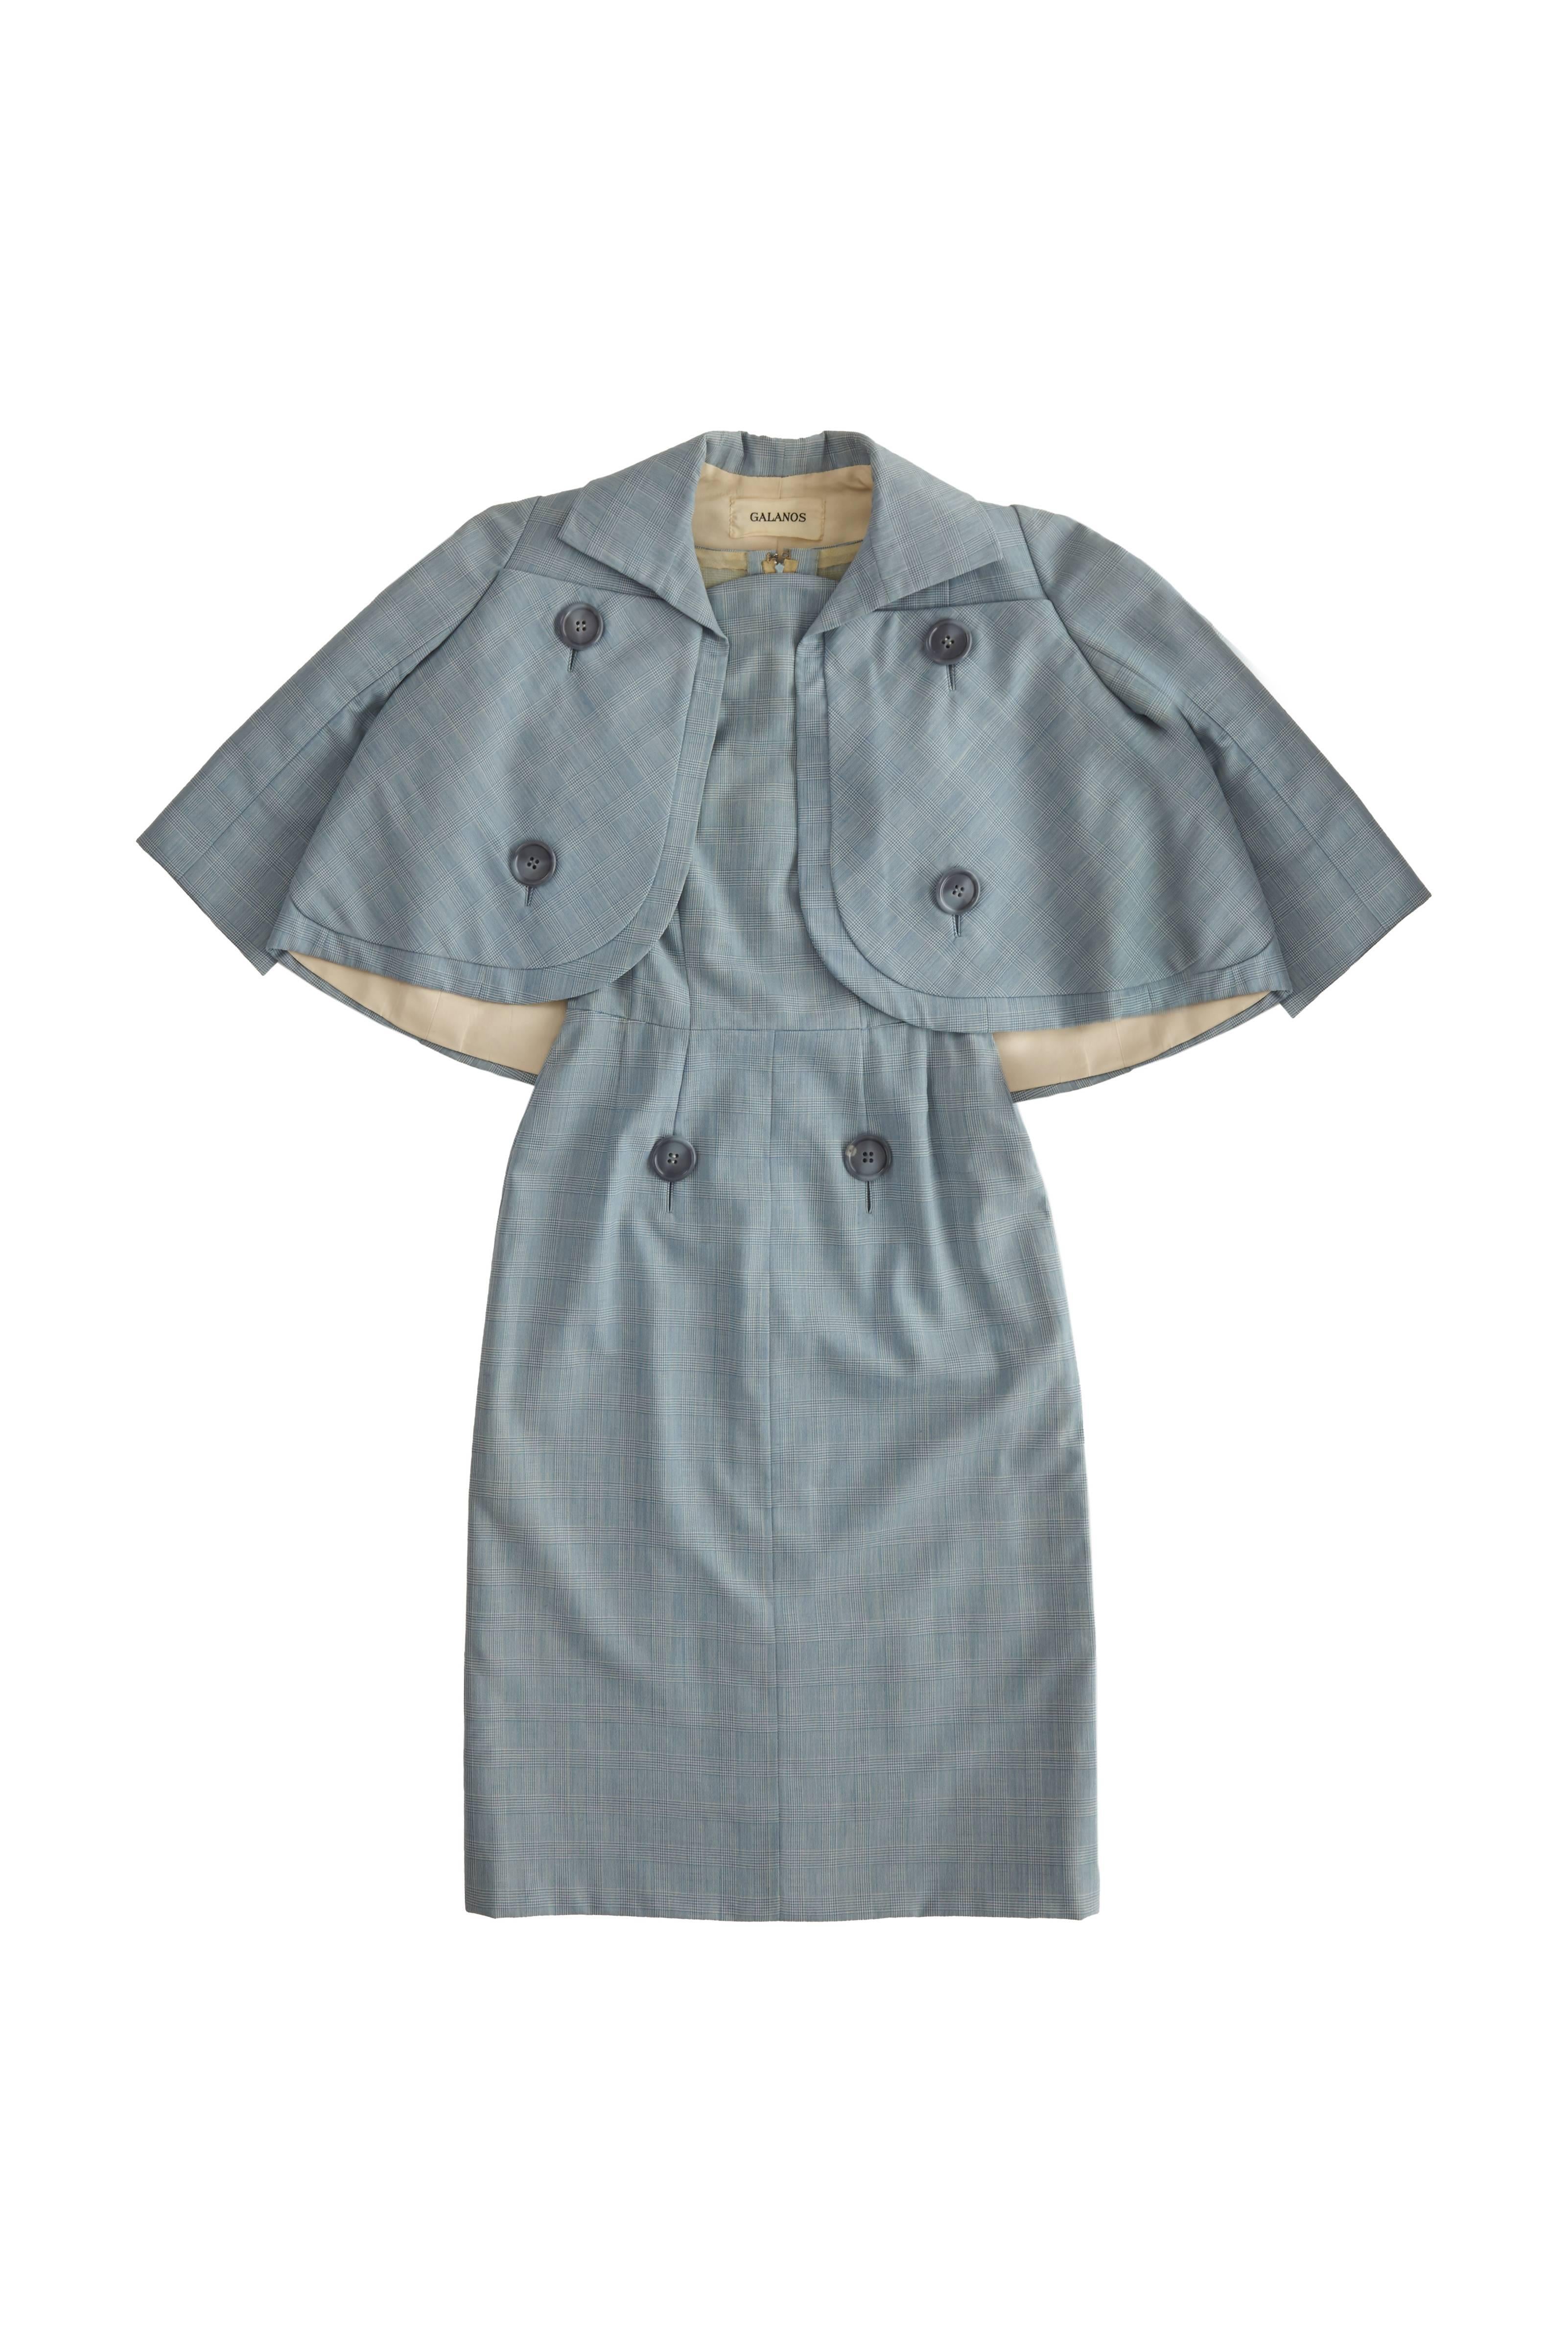 Gray 1960s Galanos Blue Check Dress Suit 